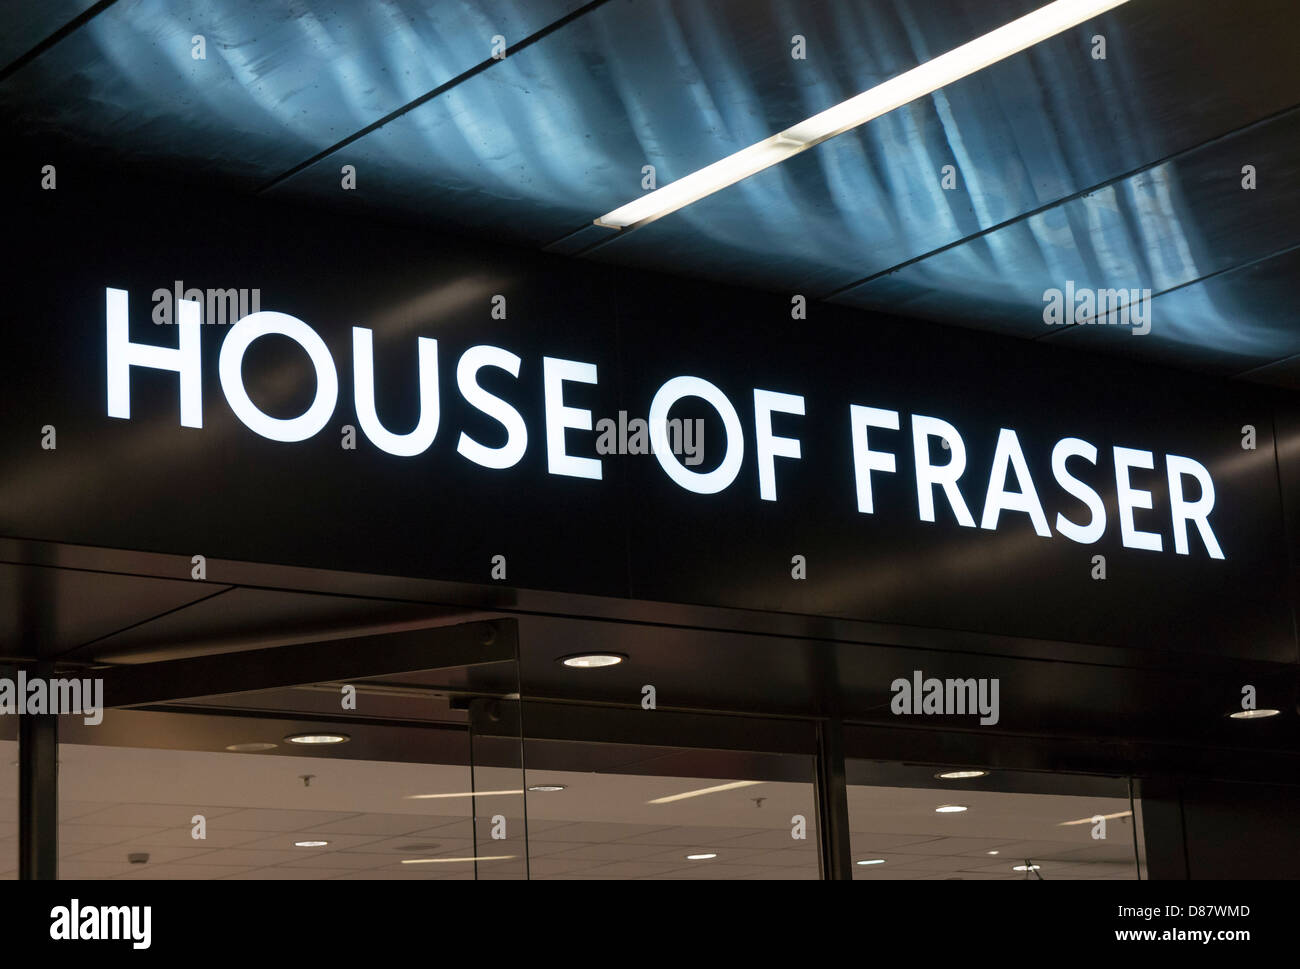 House of Fraser department store logo, UK Banque D'Images